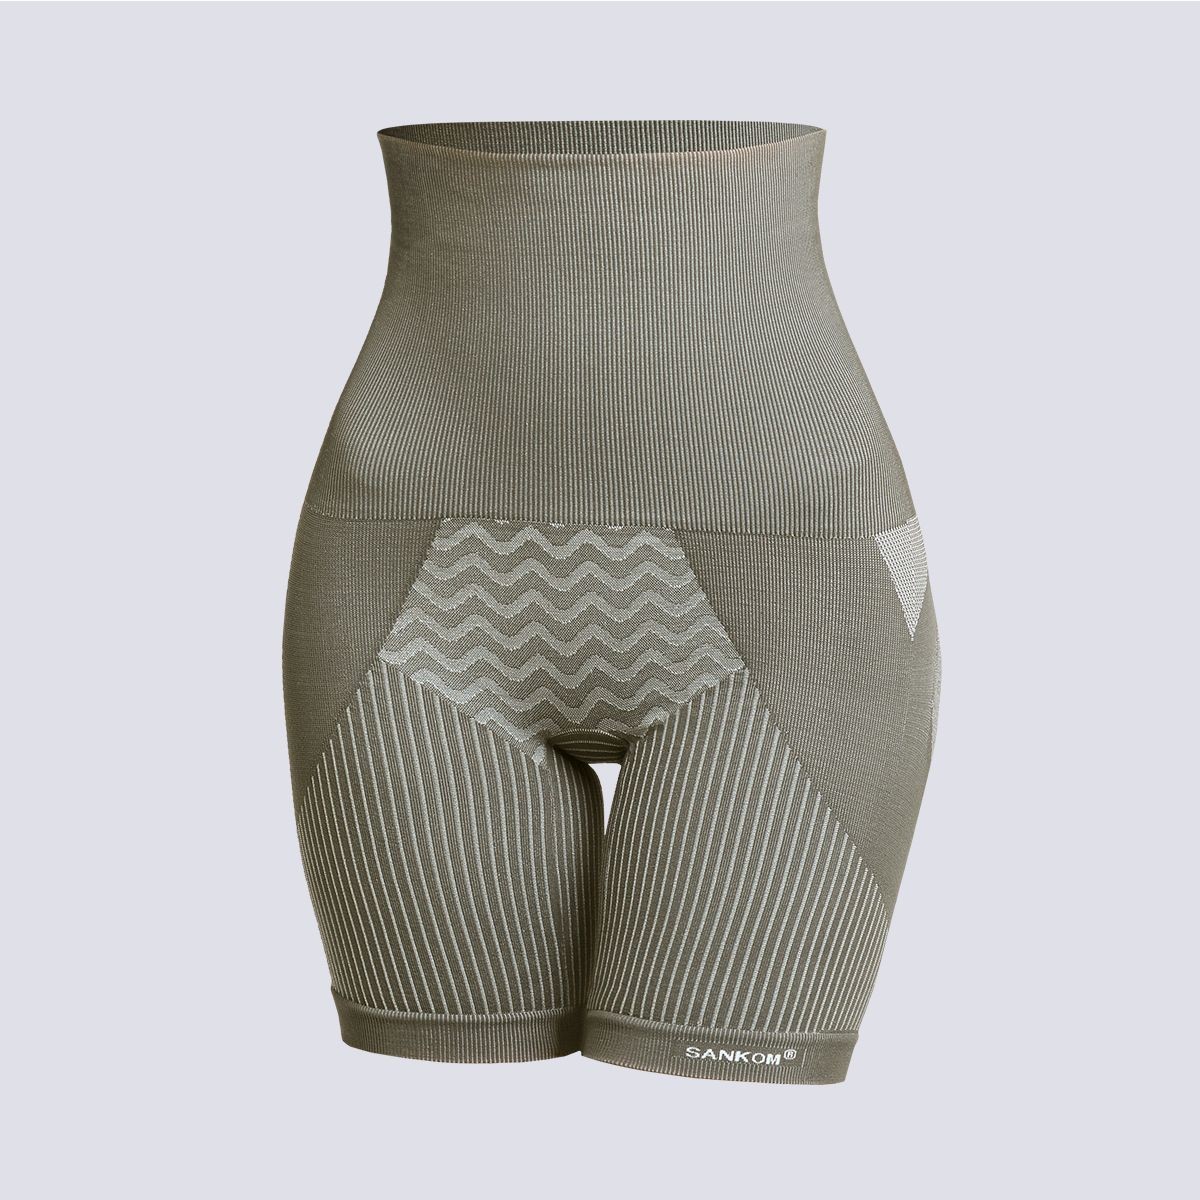 Sankom Body Shaper Shorts Bamboo Fibers Posture Grey Small/Medium Supp –  Kulud Pharmacy